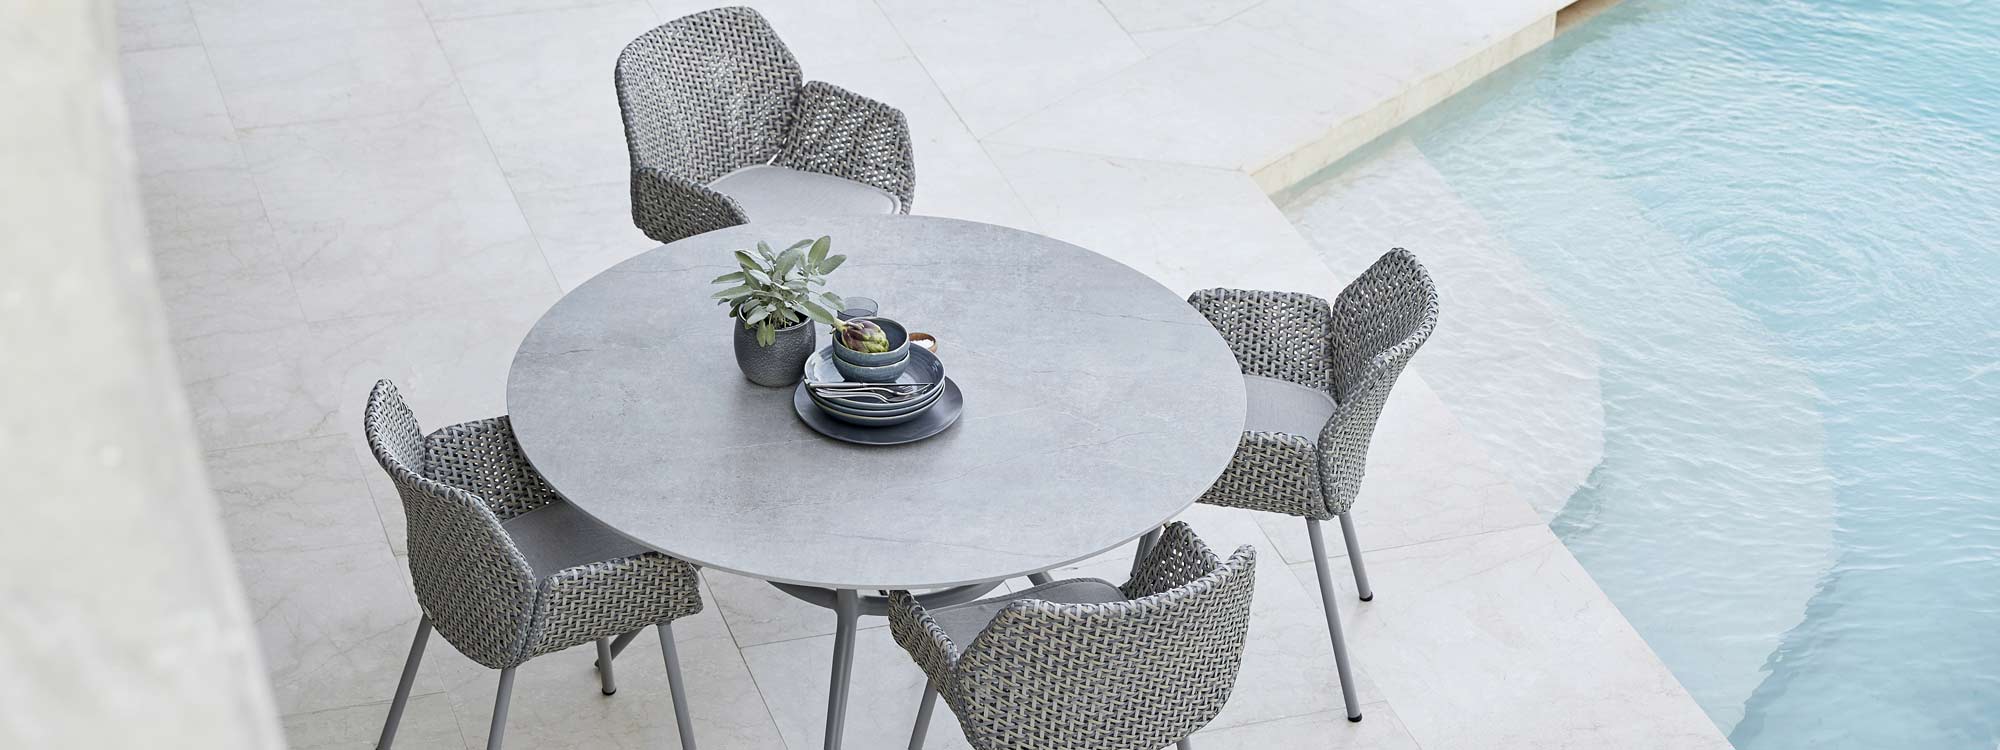 Image of Vibe rattan chairs around Cane-line Joy circular garden table, shown in sleek modern poolside